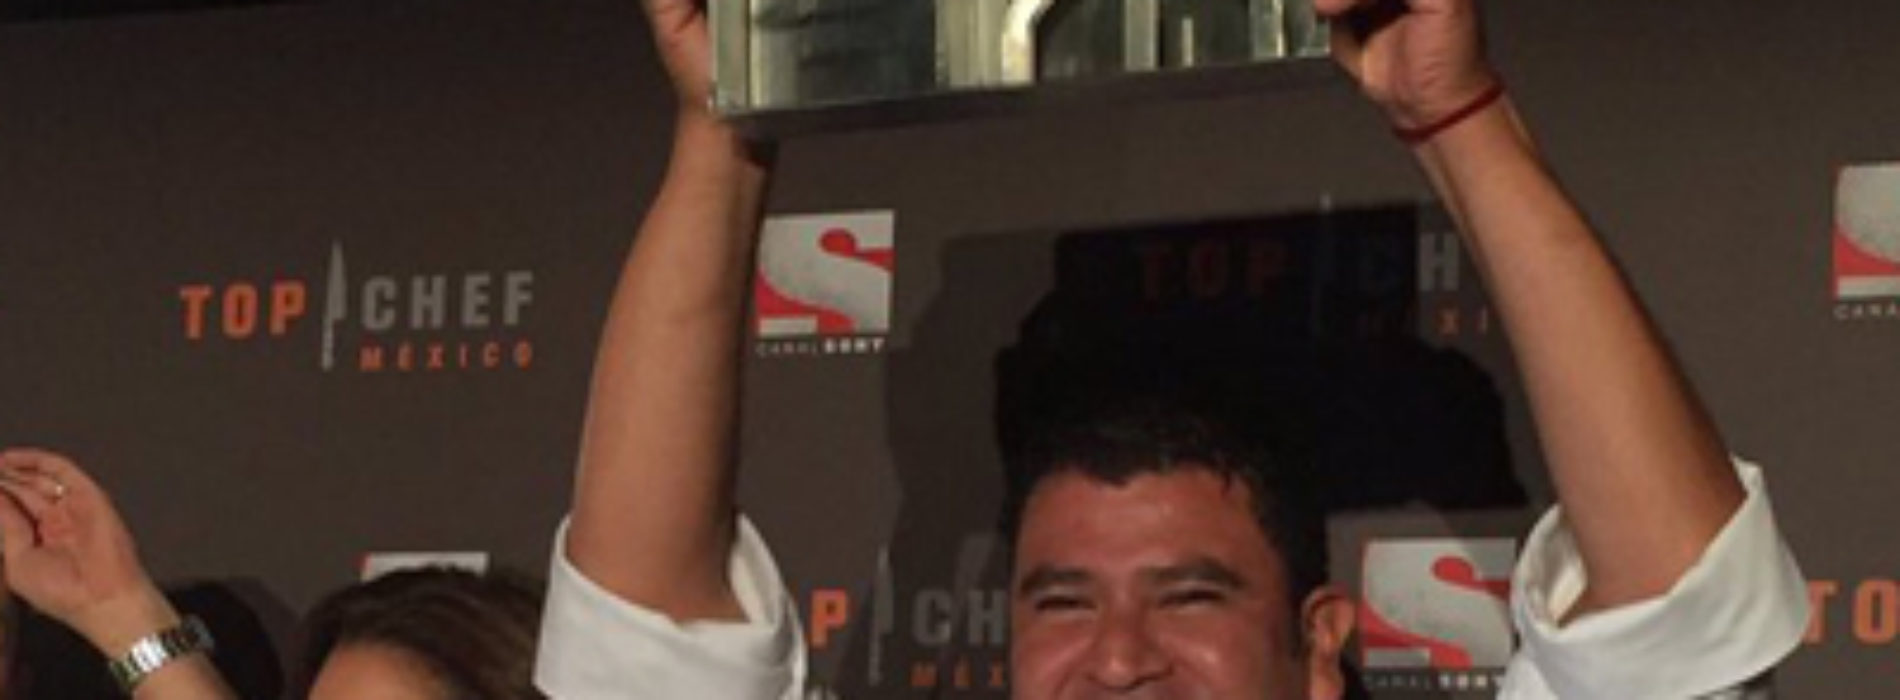 Chef oaxaqueño Rodolfo Castellanos Bolaños gana reality show “Top Chef México”